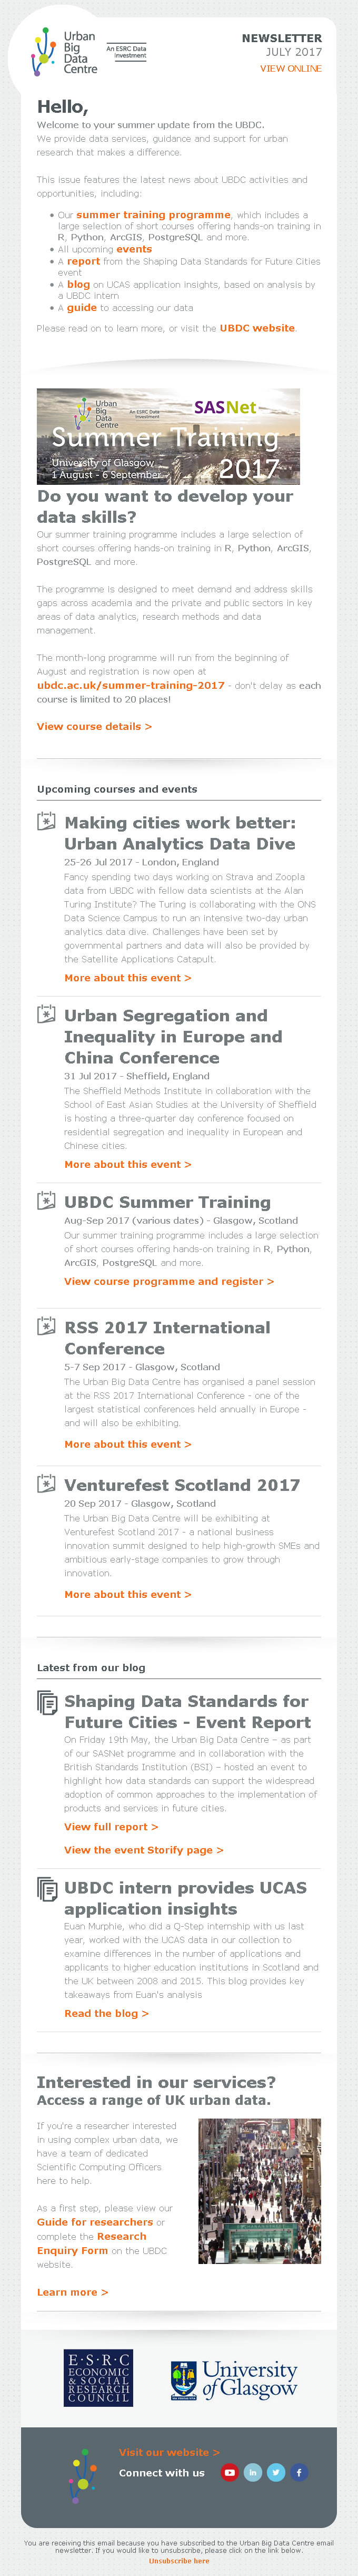 UBDC Newsletter - July 2017